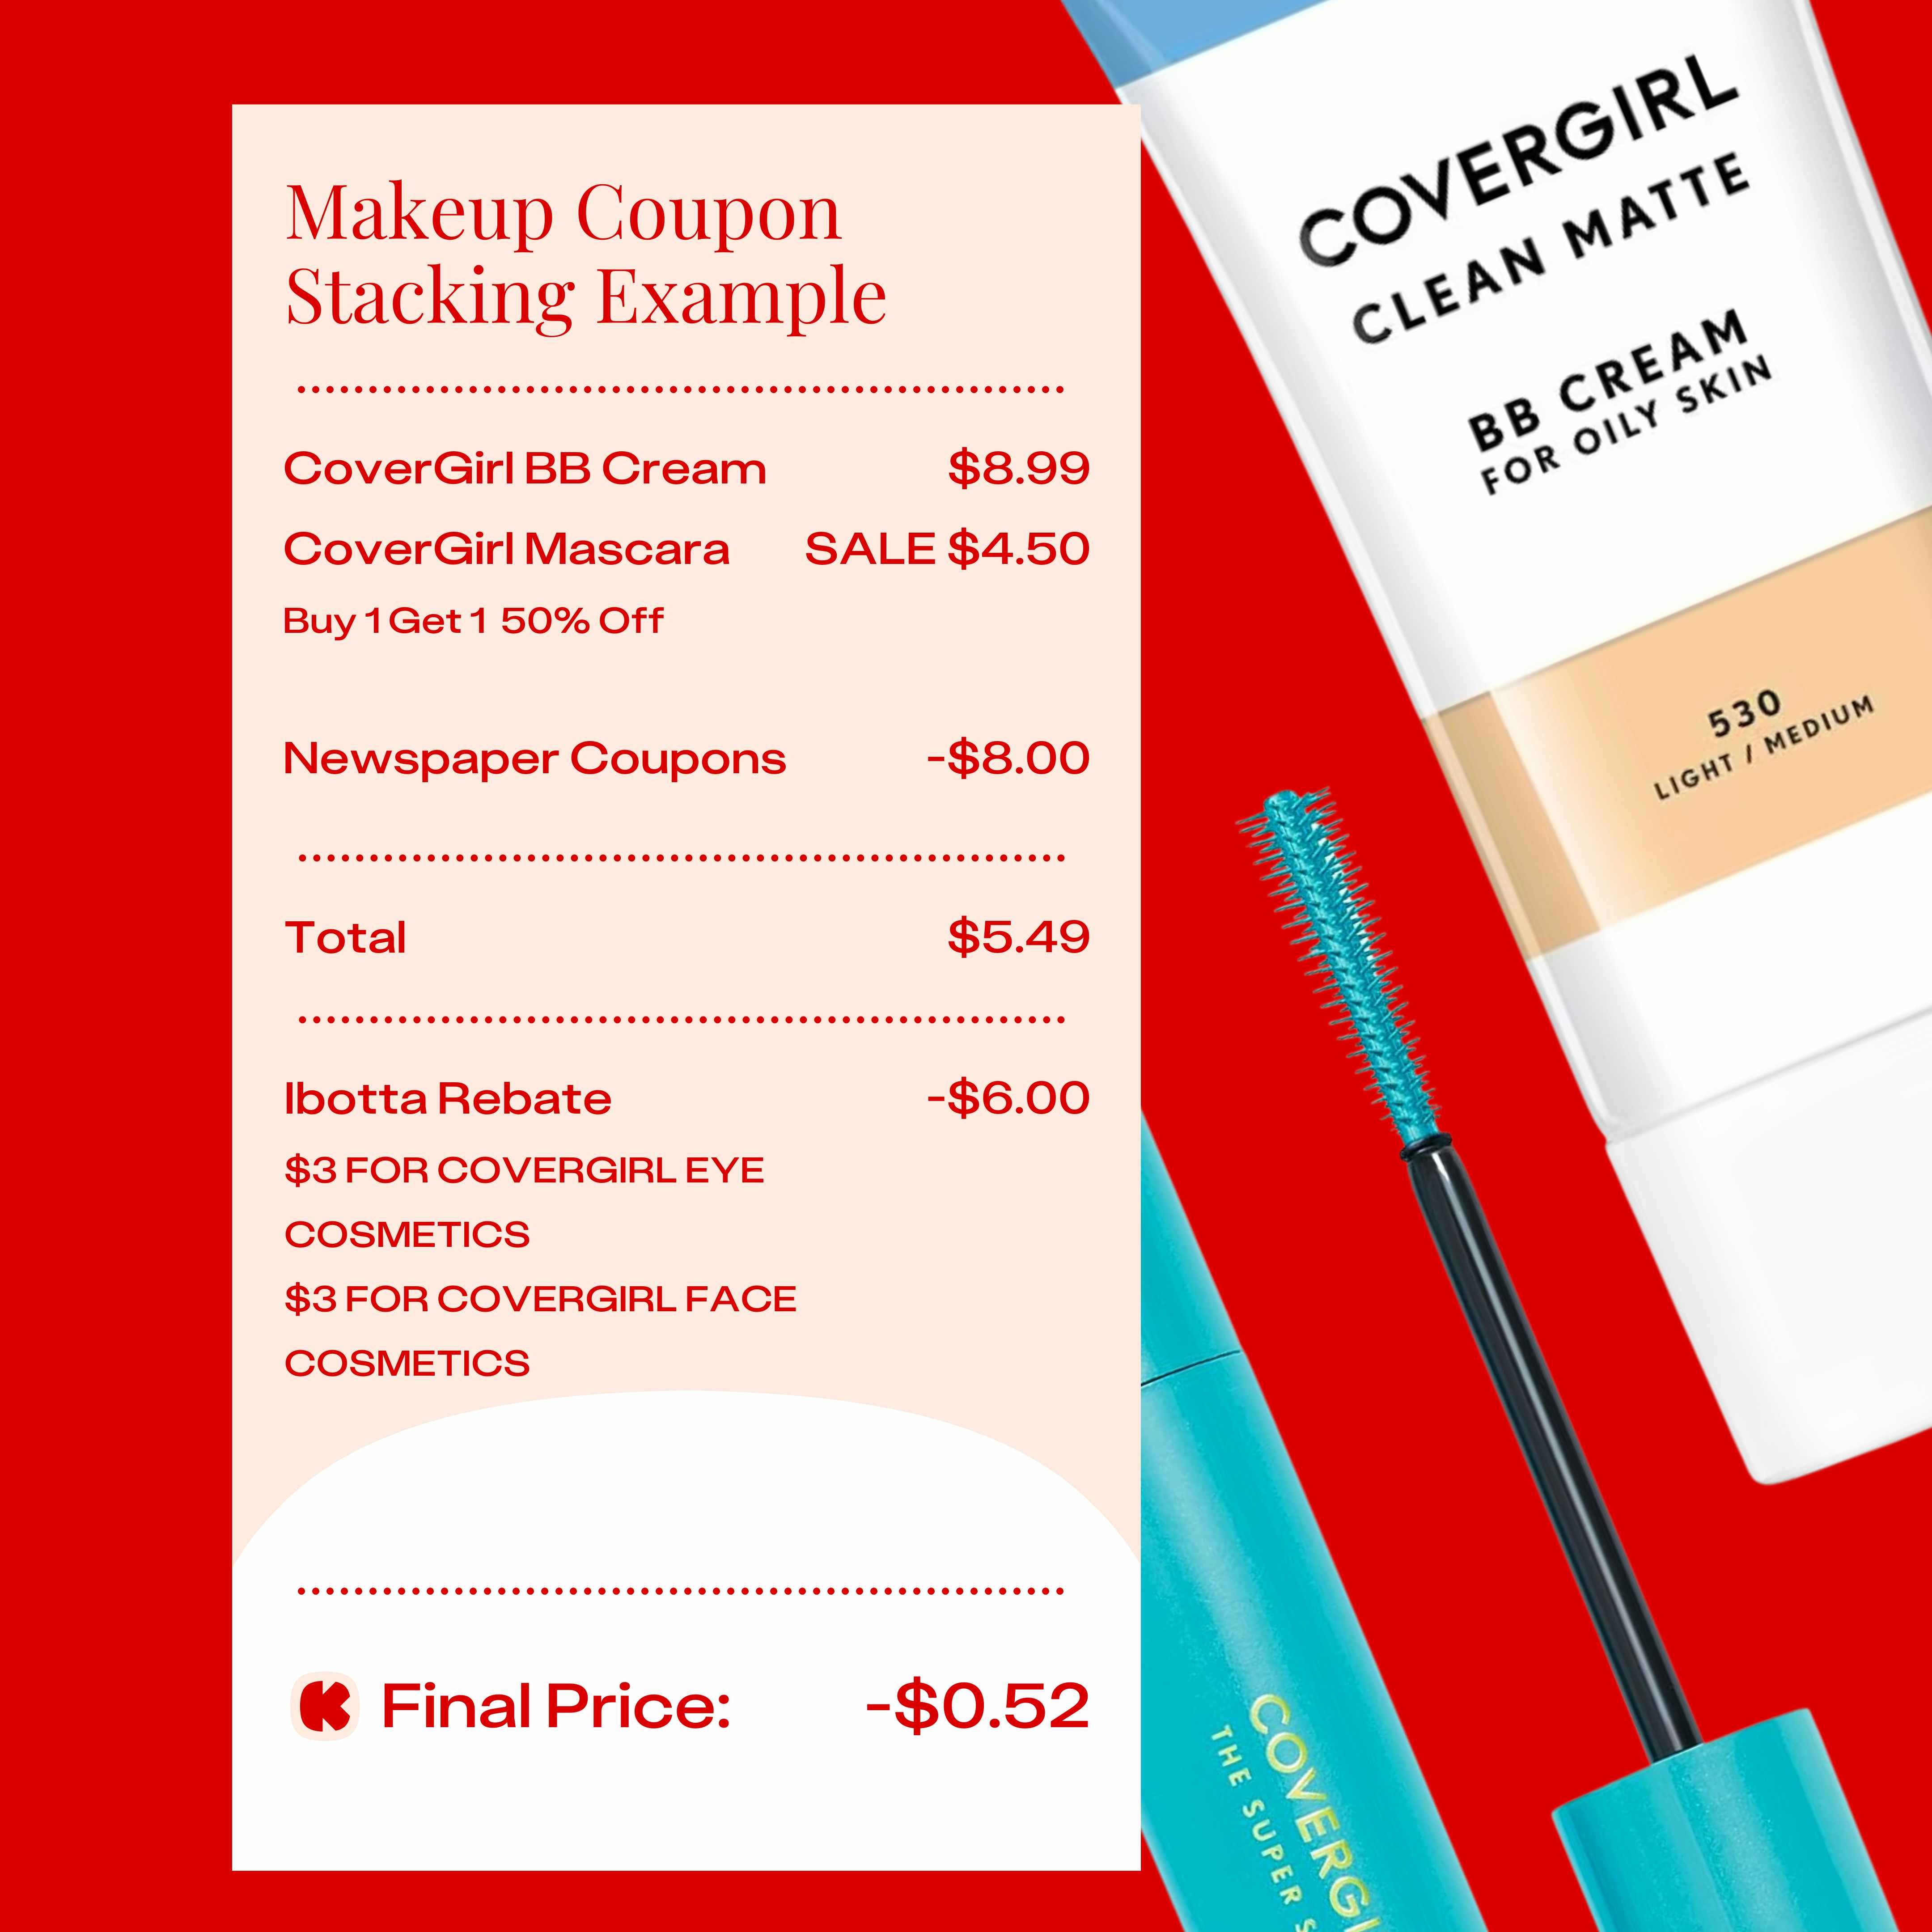 a coupon stacking example for makeup at walgreens